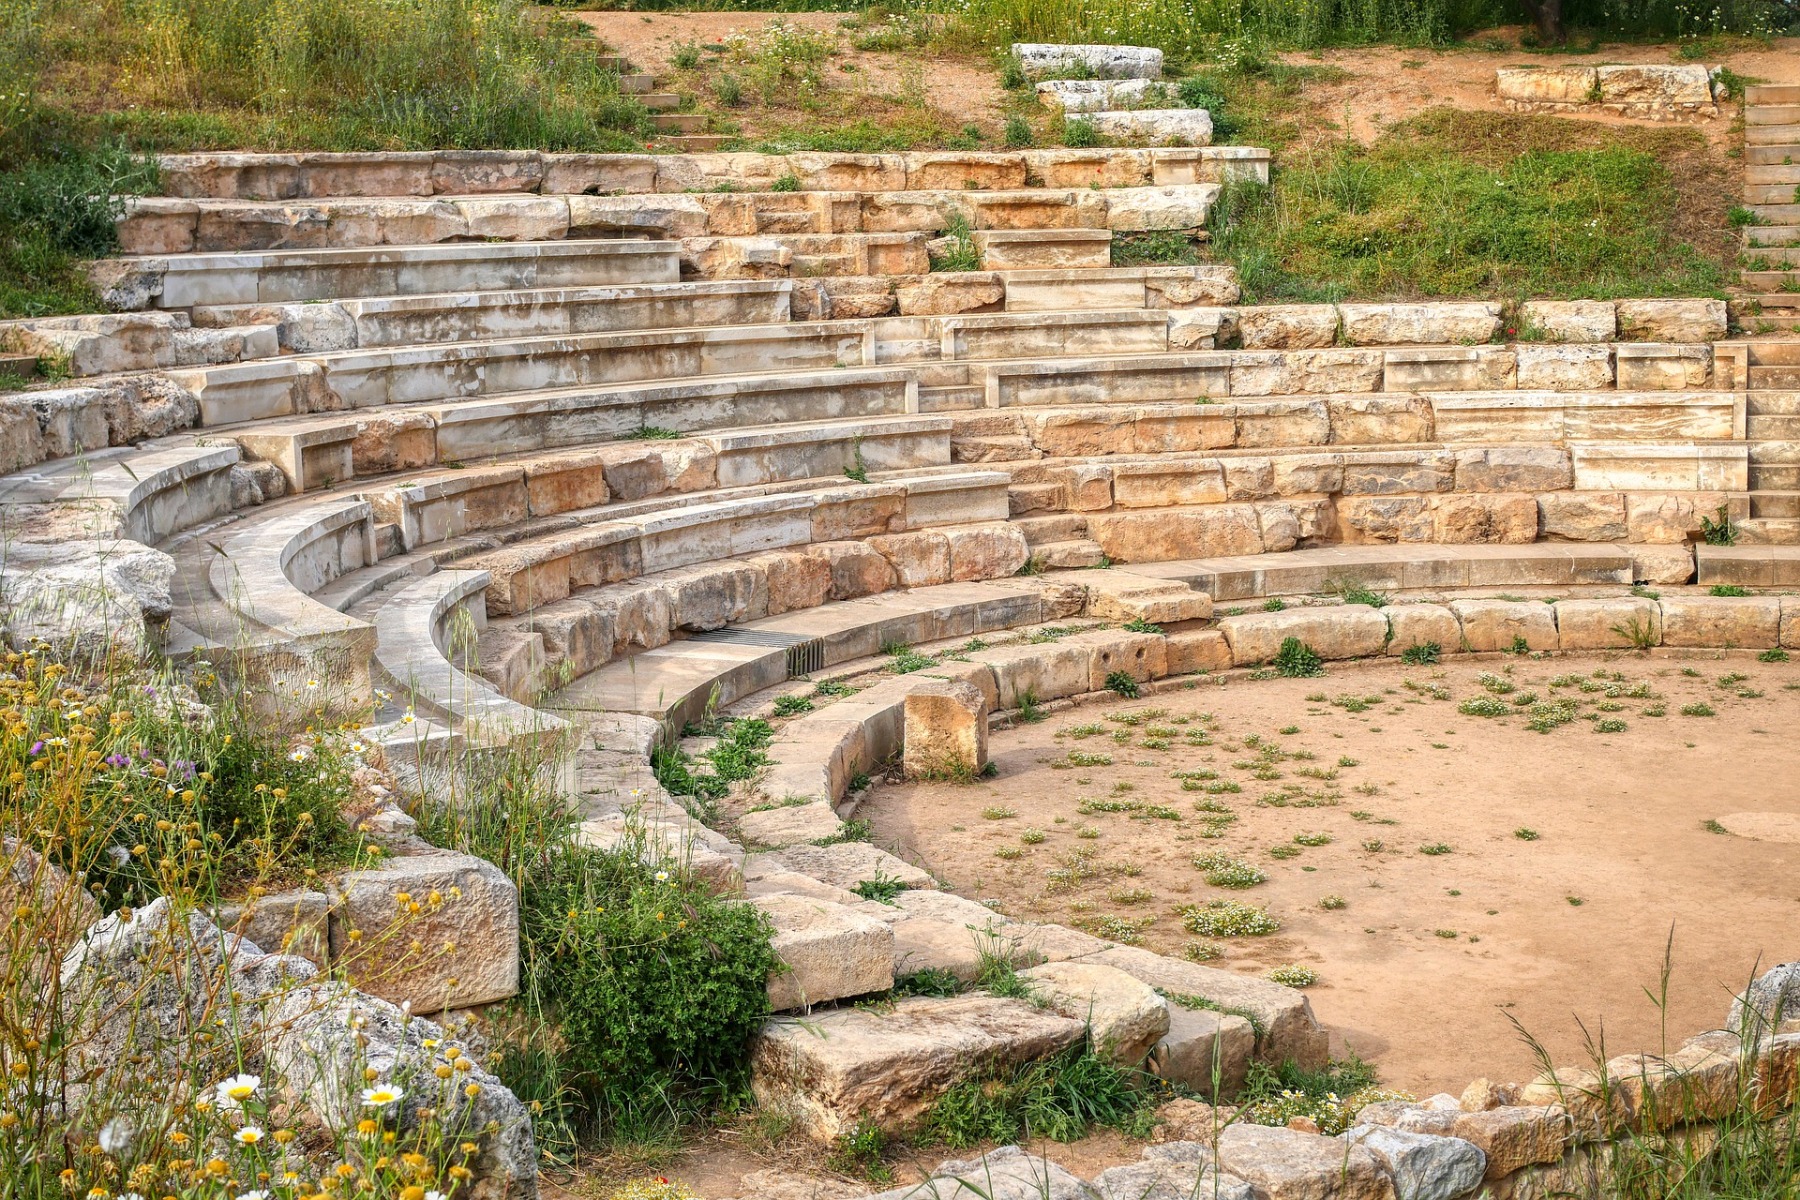 An ancient Greek theatre ruin